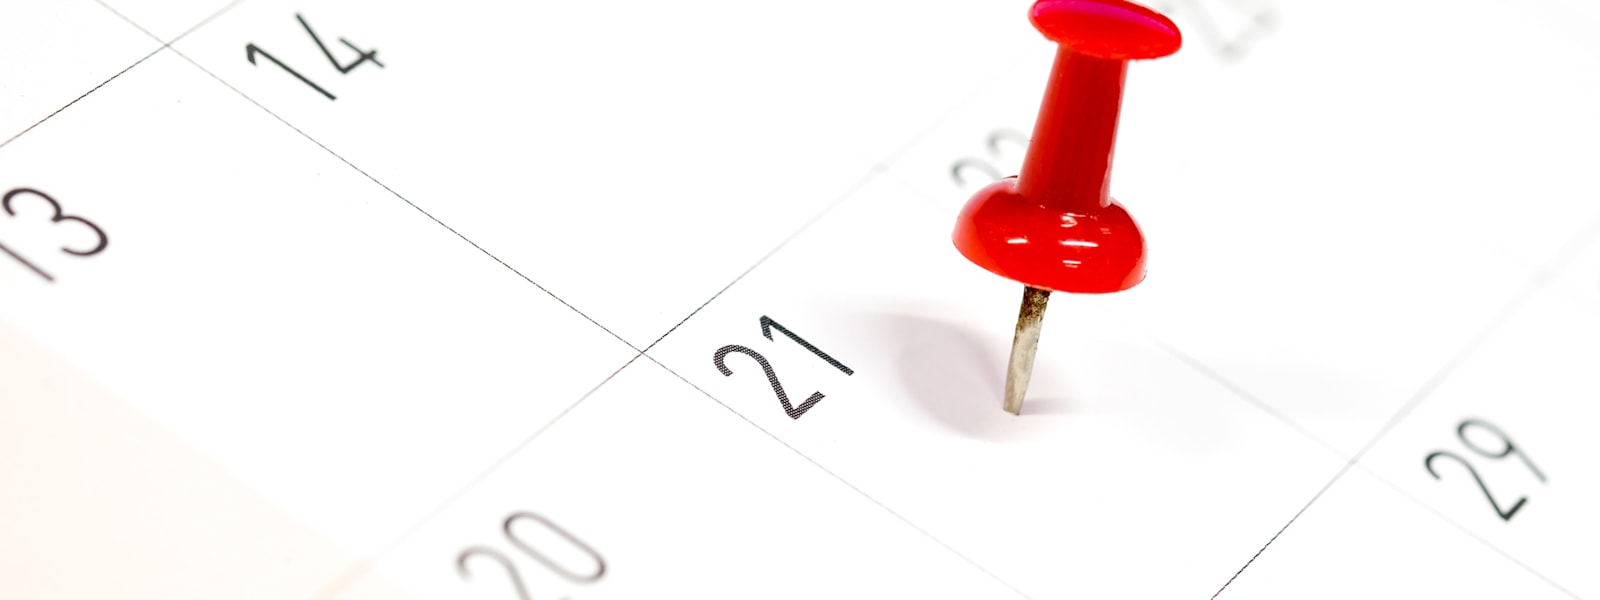 Push pin marking a date on the calendar